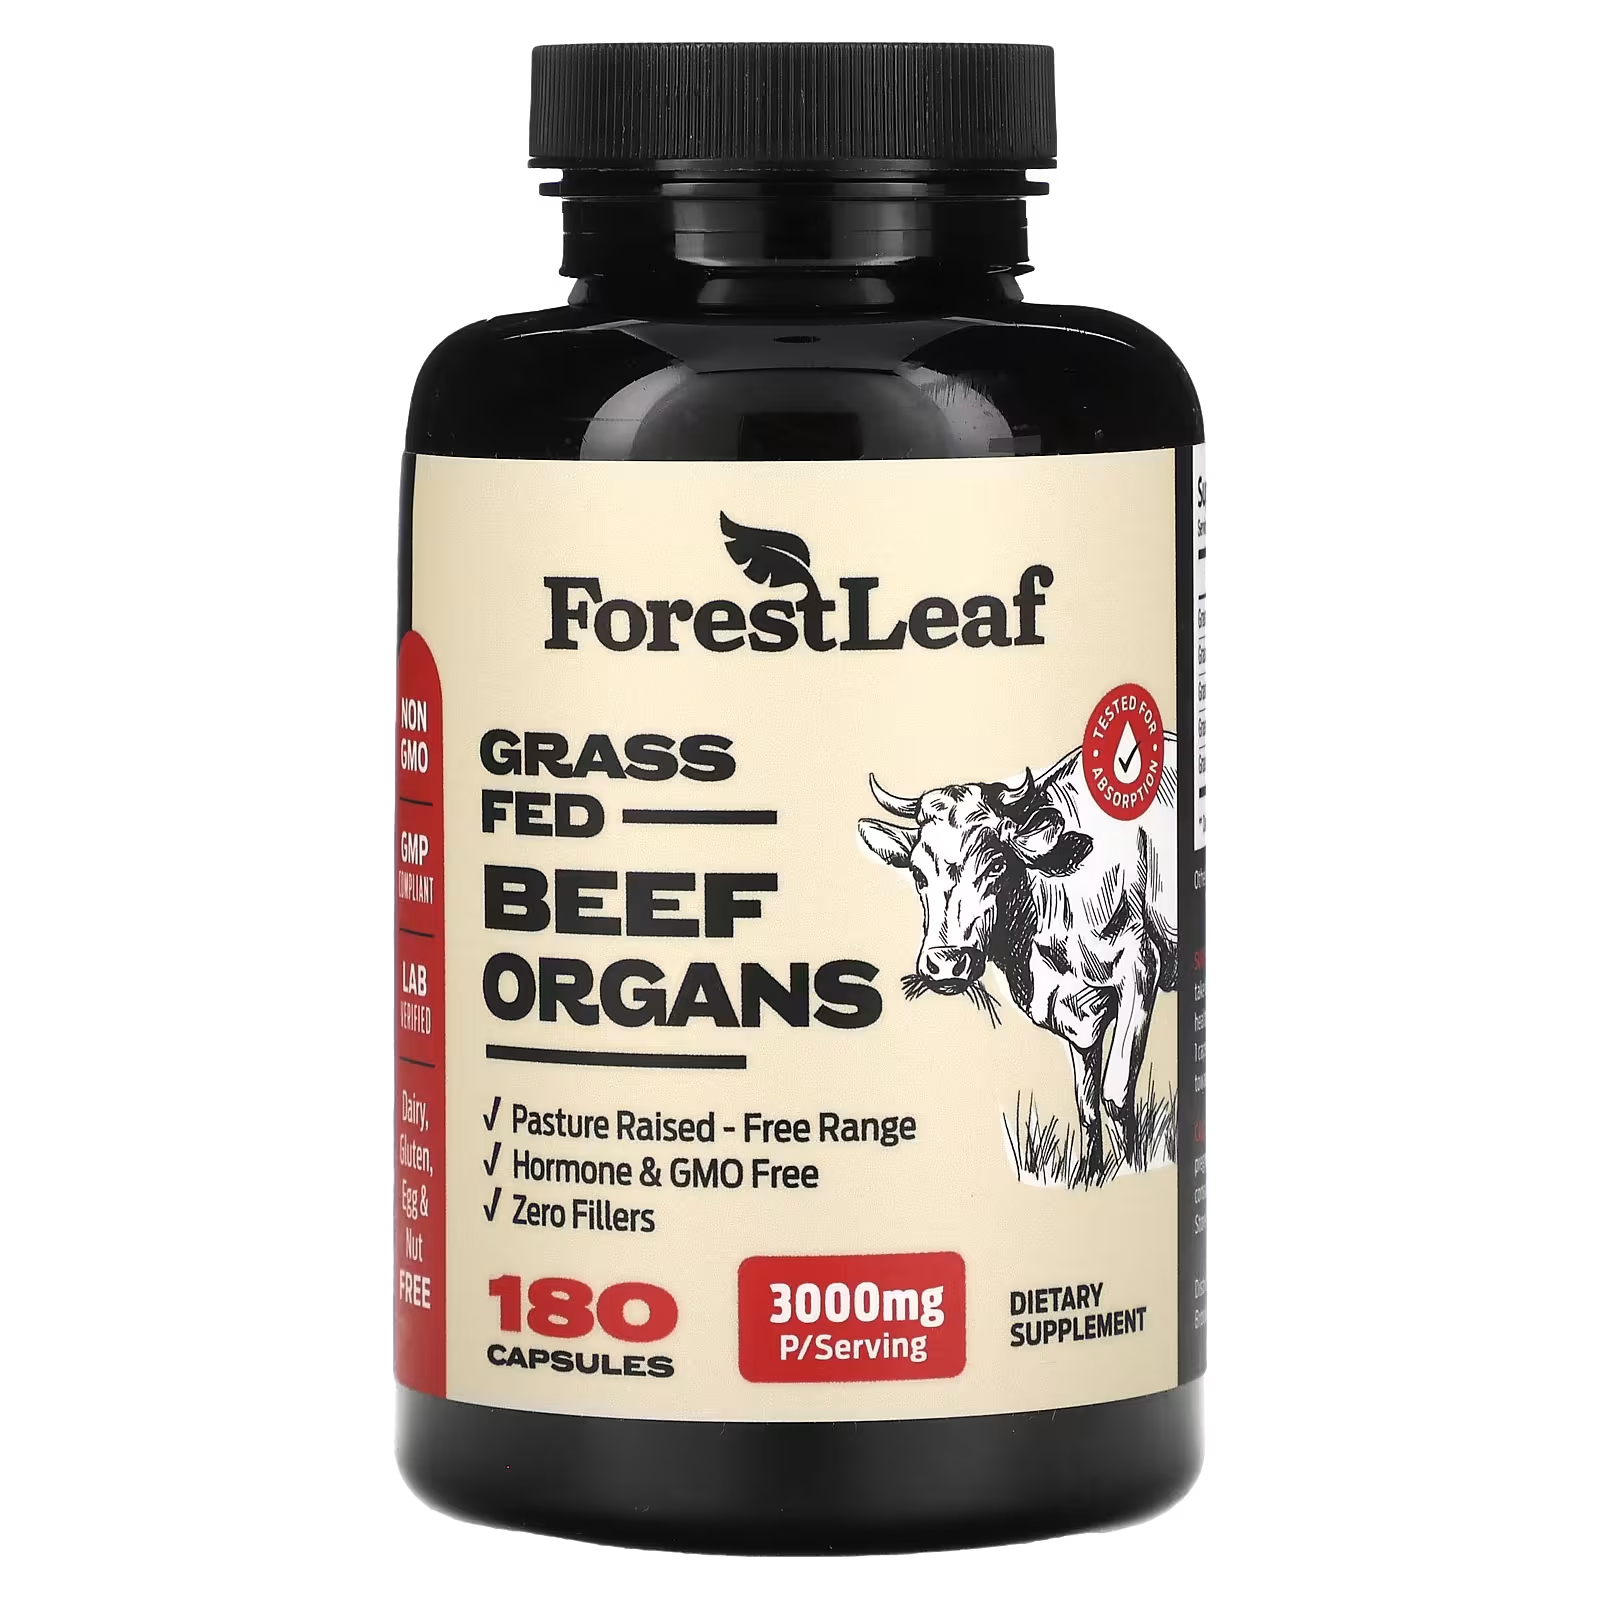 Пищевая добавка Forest Leaf говядины травяного откорма